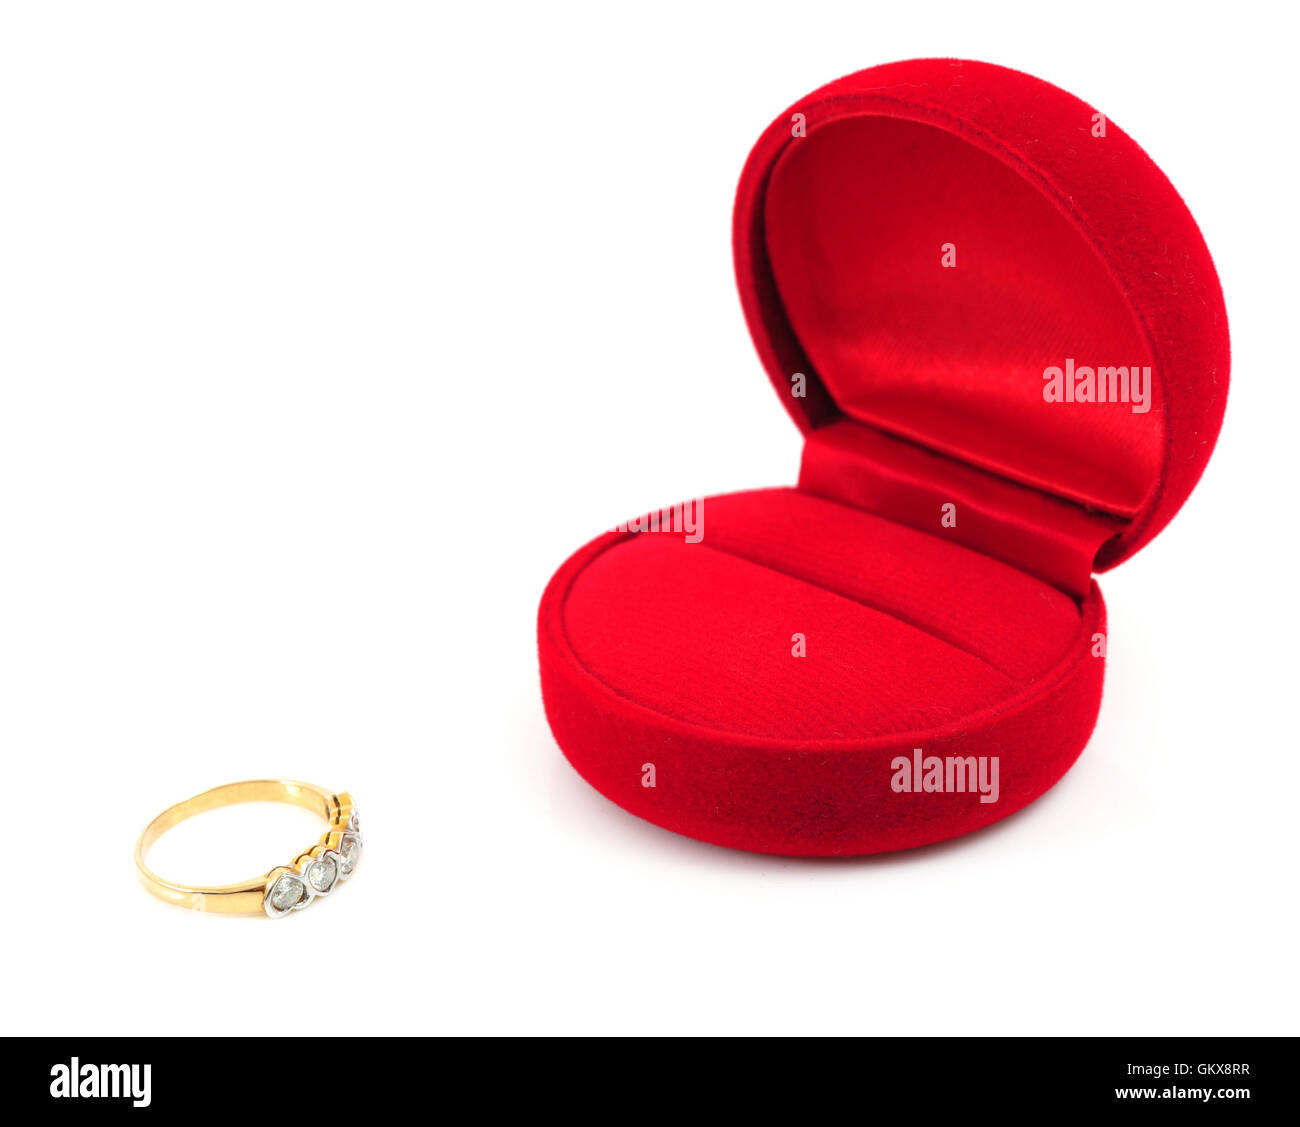 Diamant-ring Stockfoto